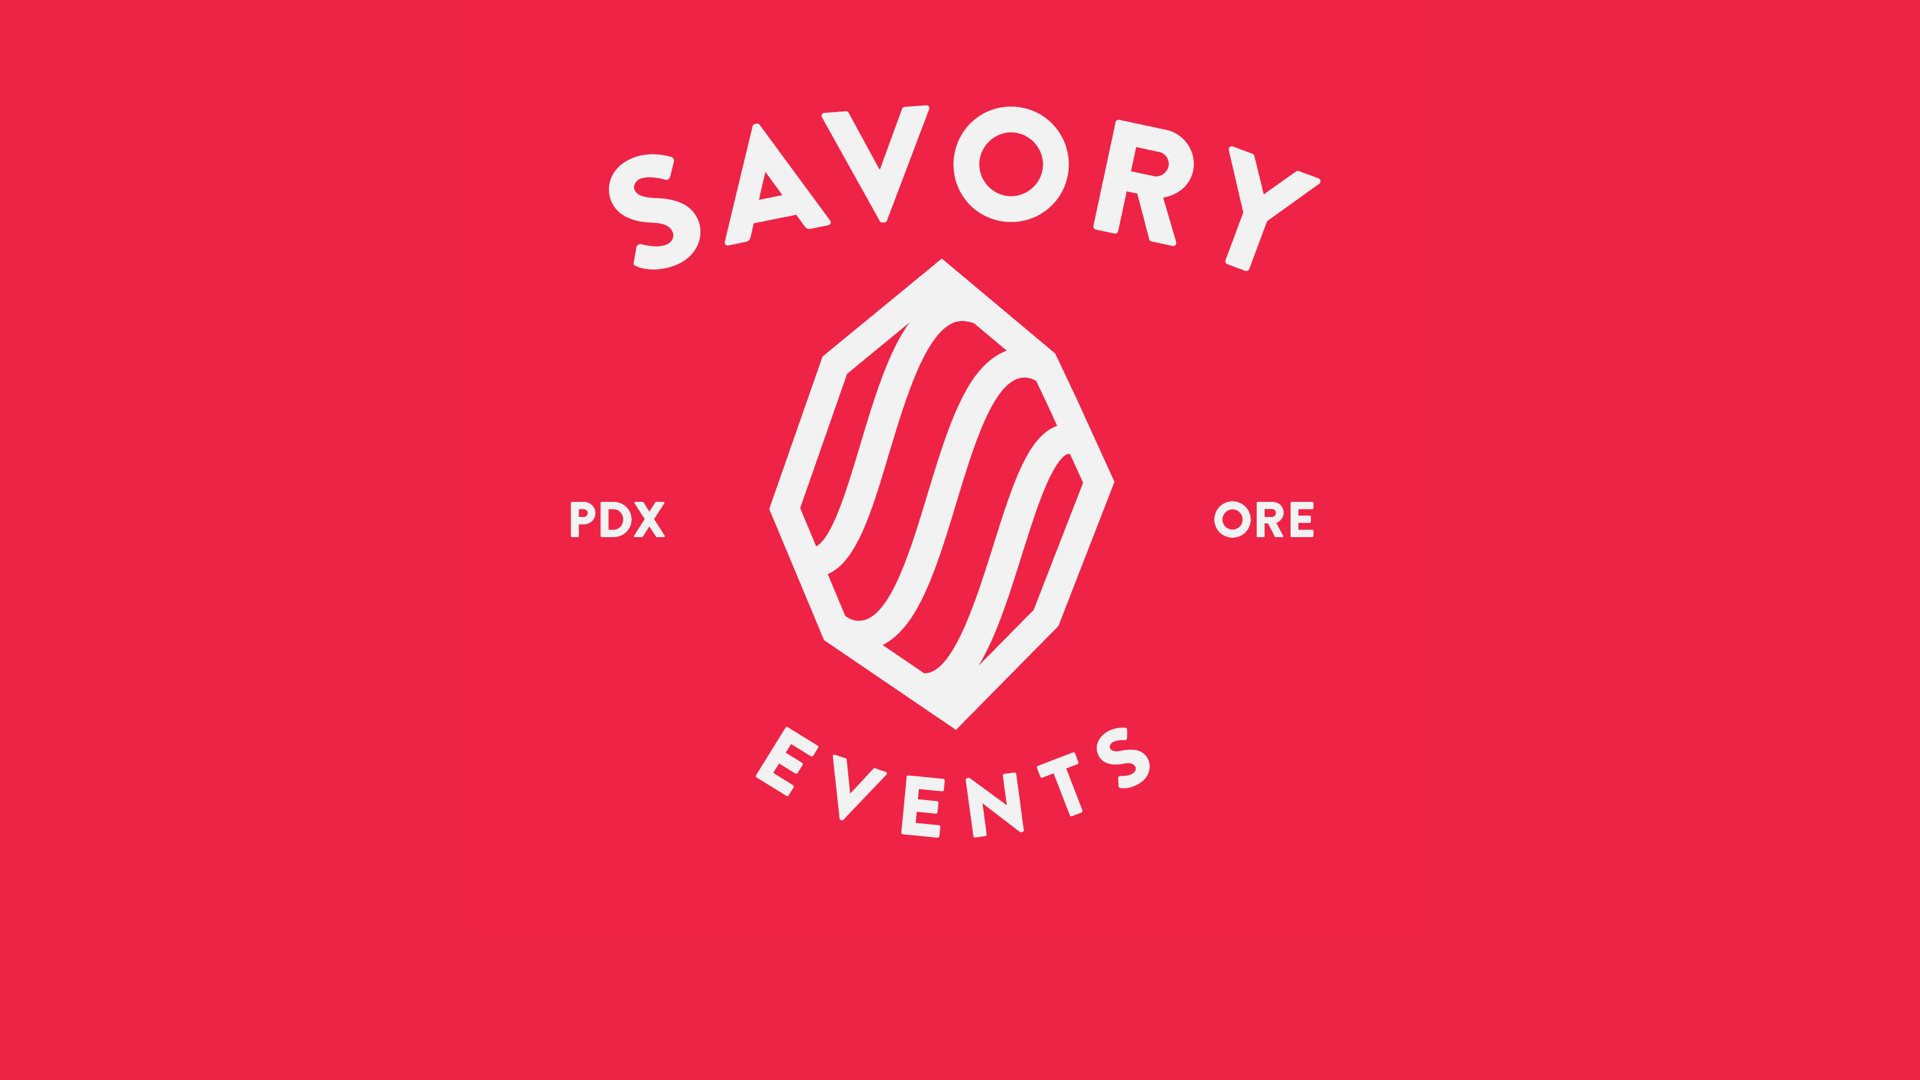 Savory Events